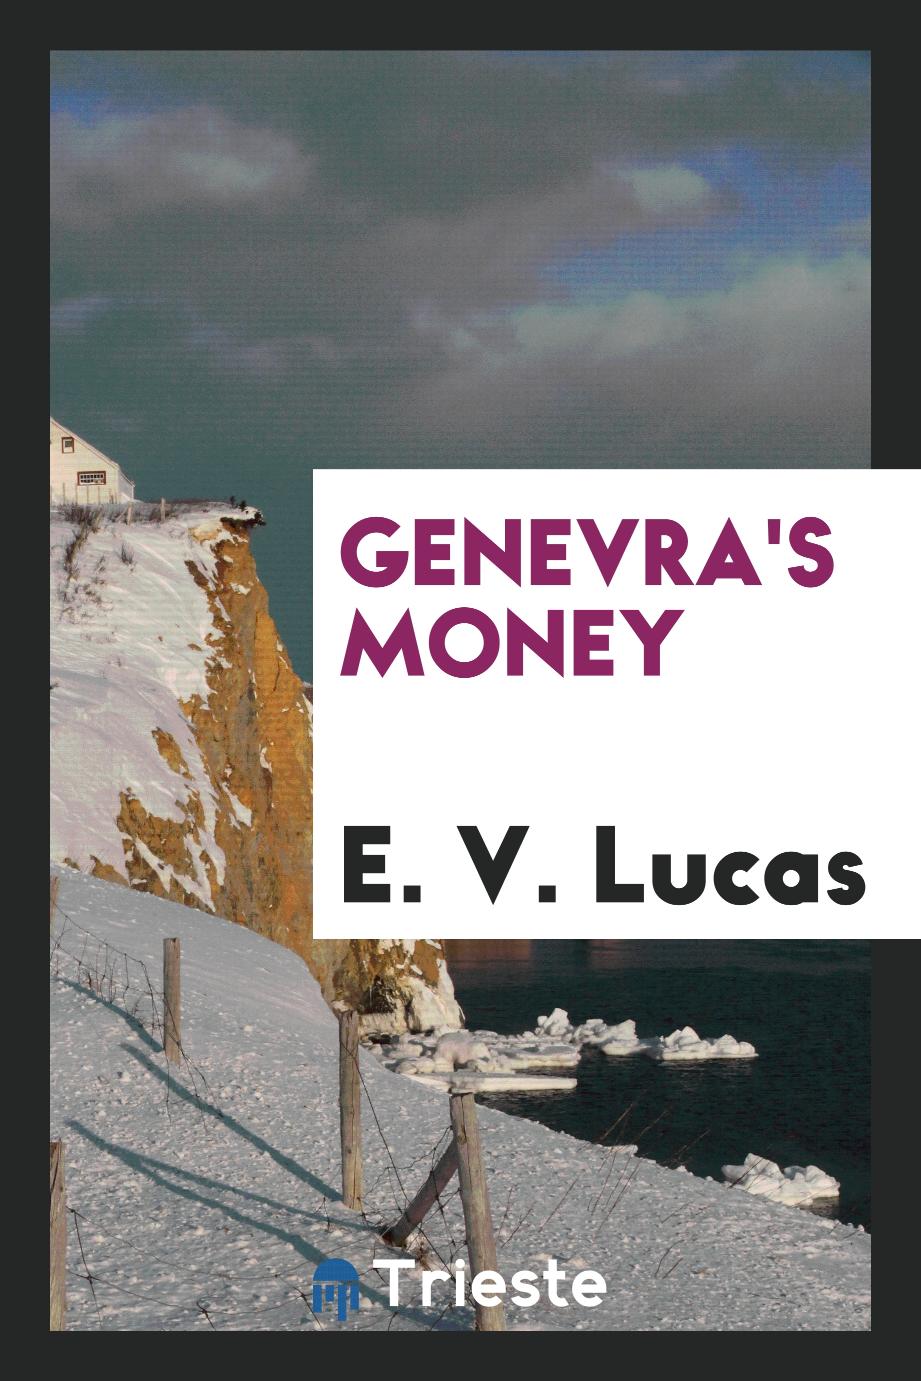 Genevra's money